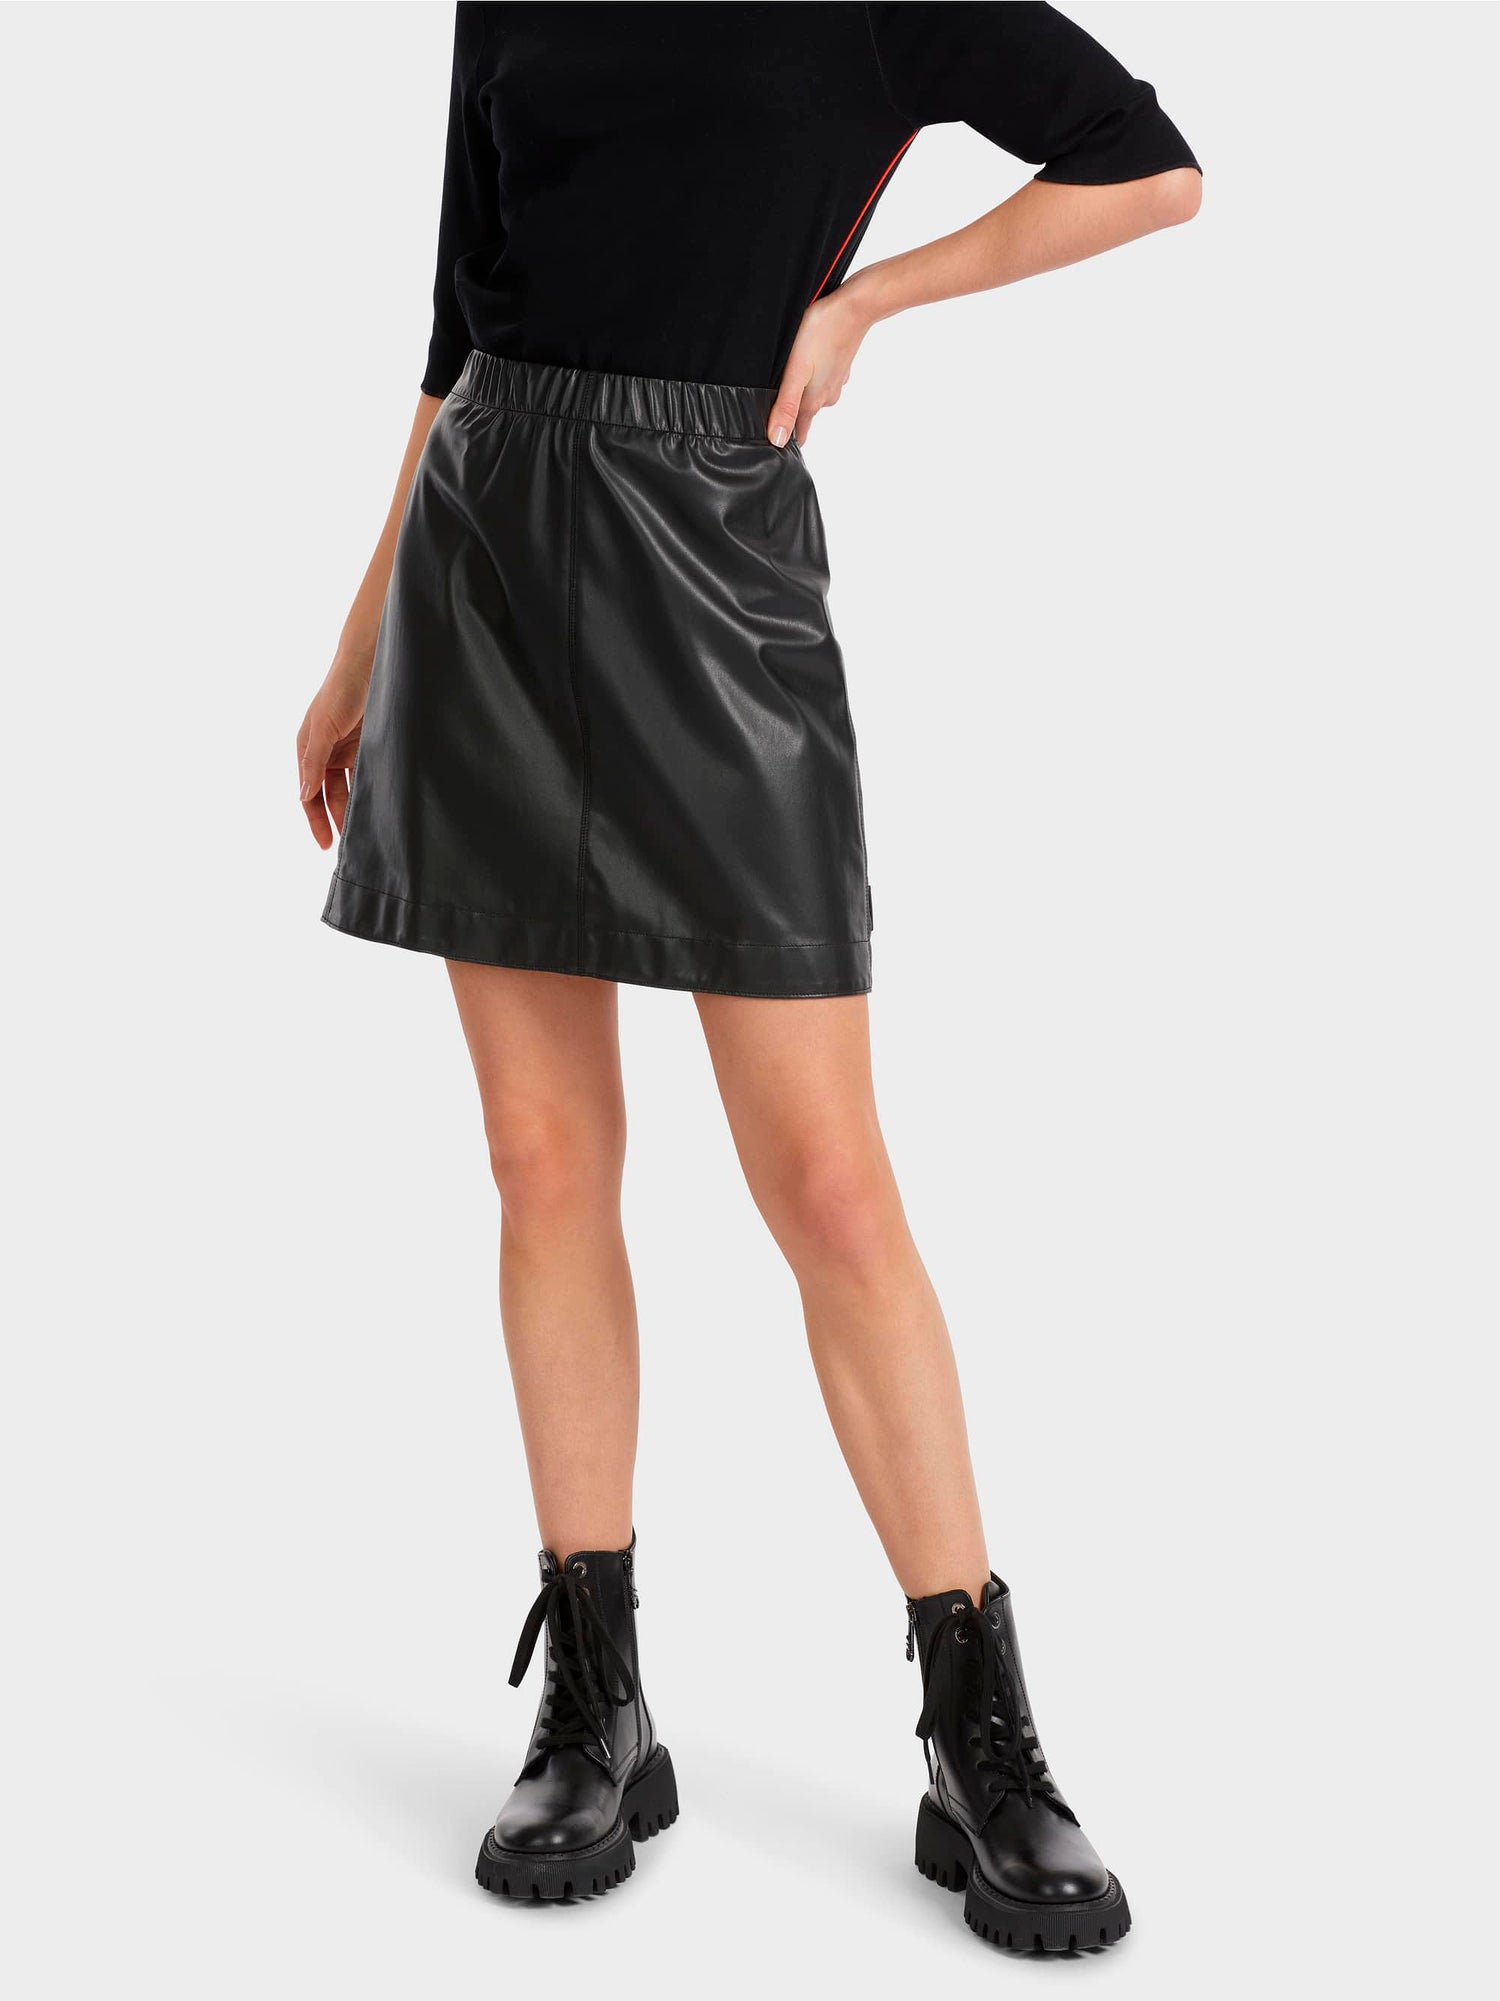 Short Skirt In Fun Leather_VS 31.06 J06_900_04